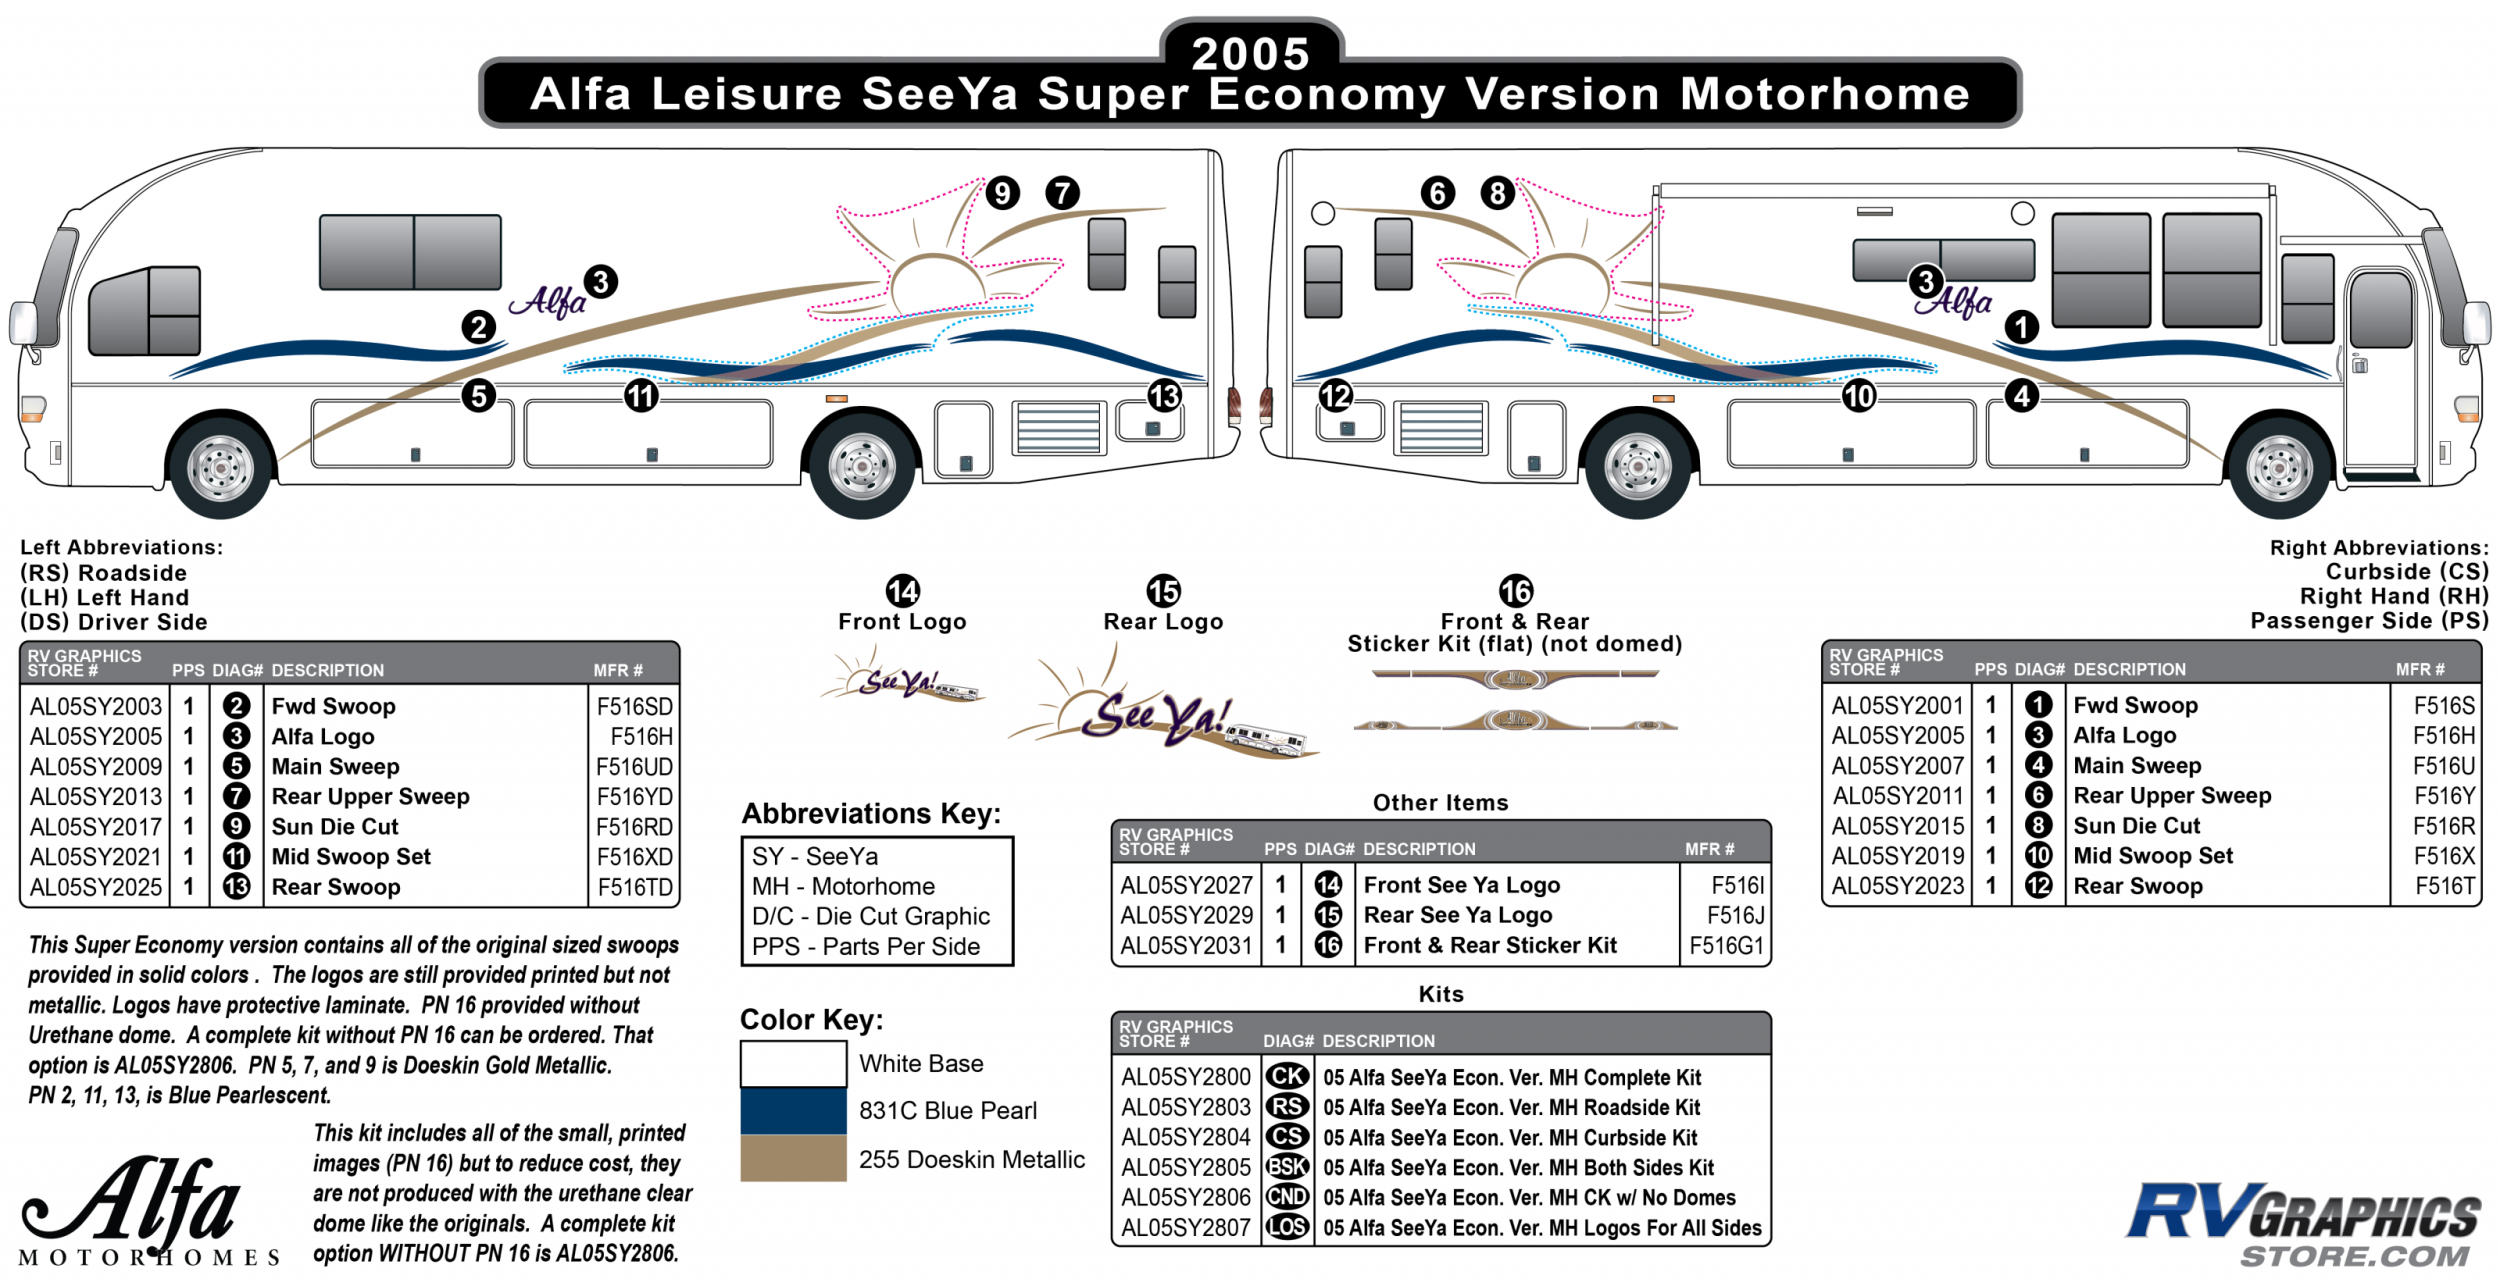 Seeya Motorhome - 2005 Seeya MH-Motorhome Super Economy Version